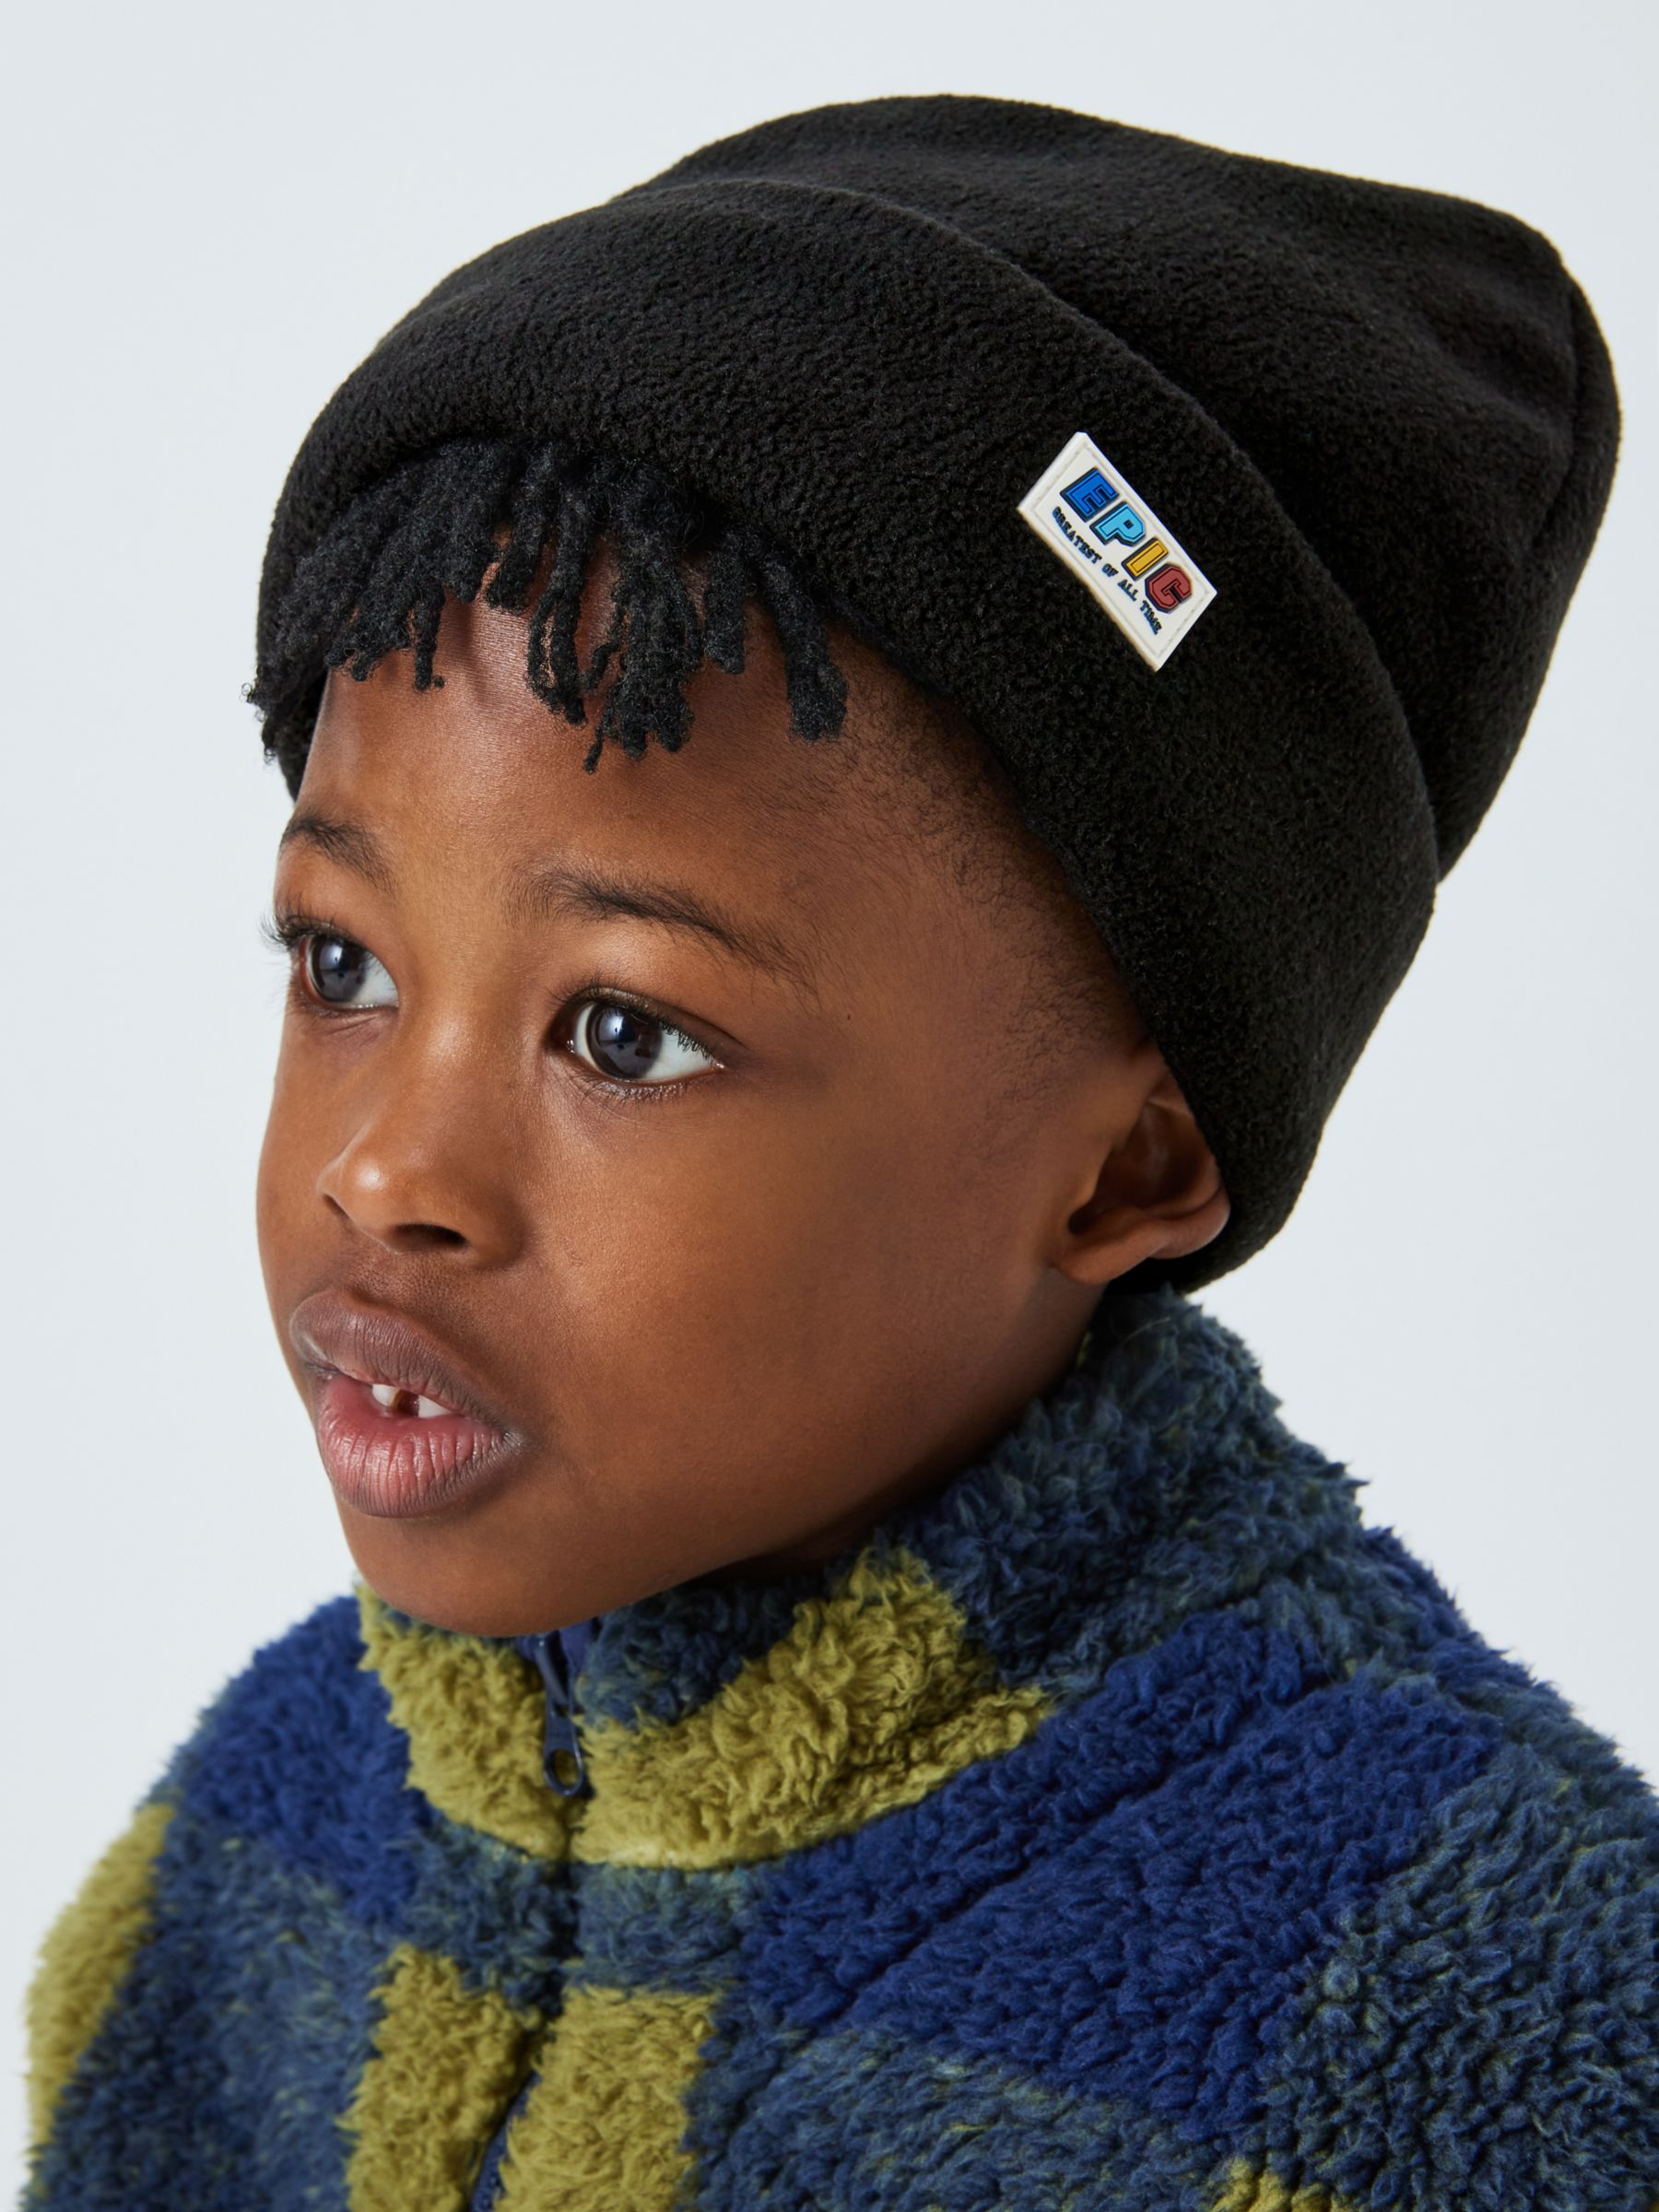 Buy John Lewis Kids' Plain Fleece and Stripe Beanie Hat, Pack of 2, Black/Green Online at johnlewis.com